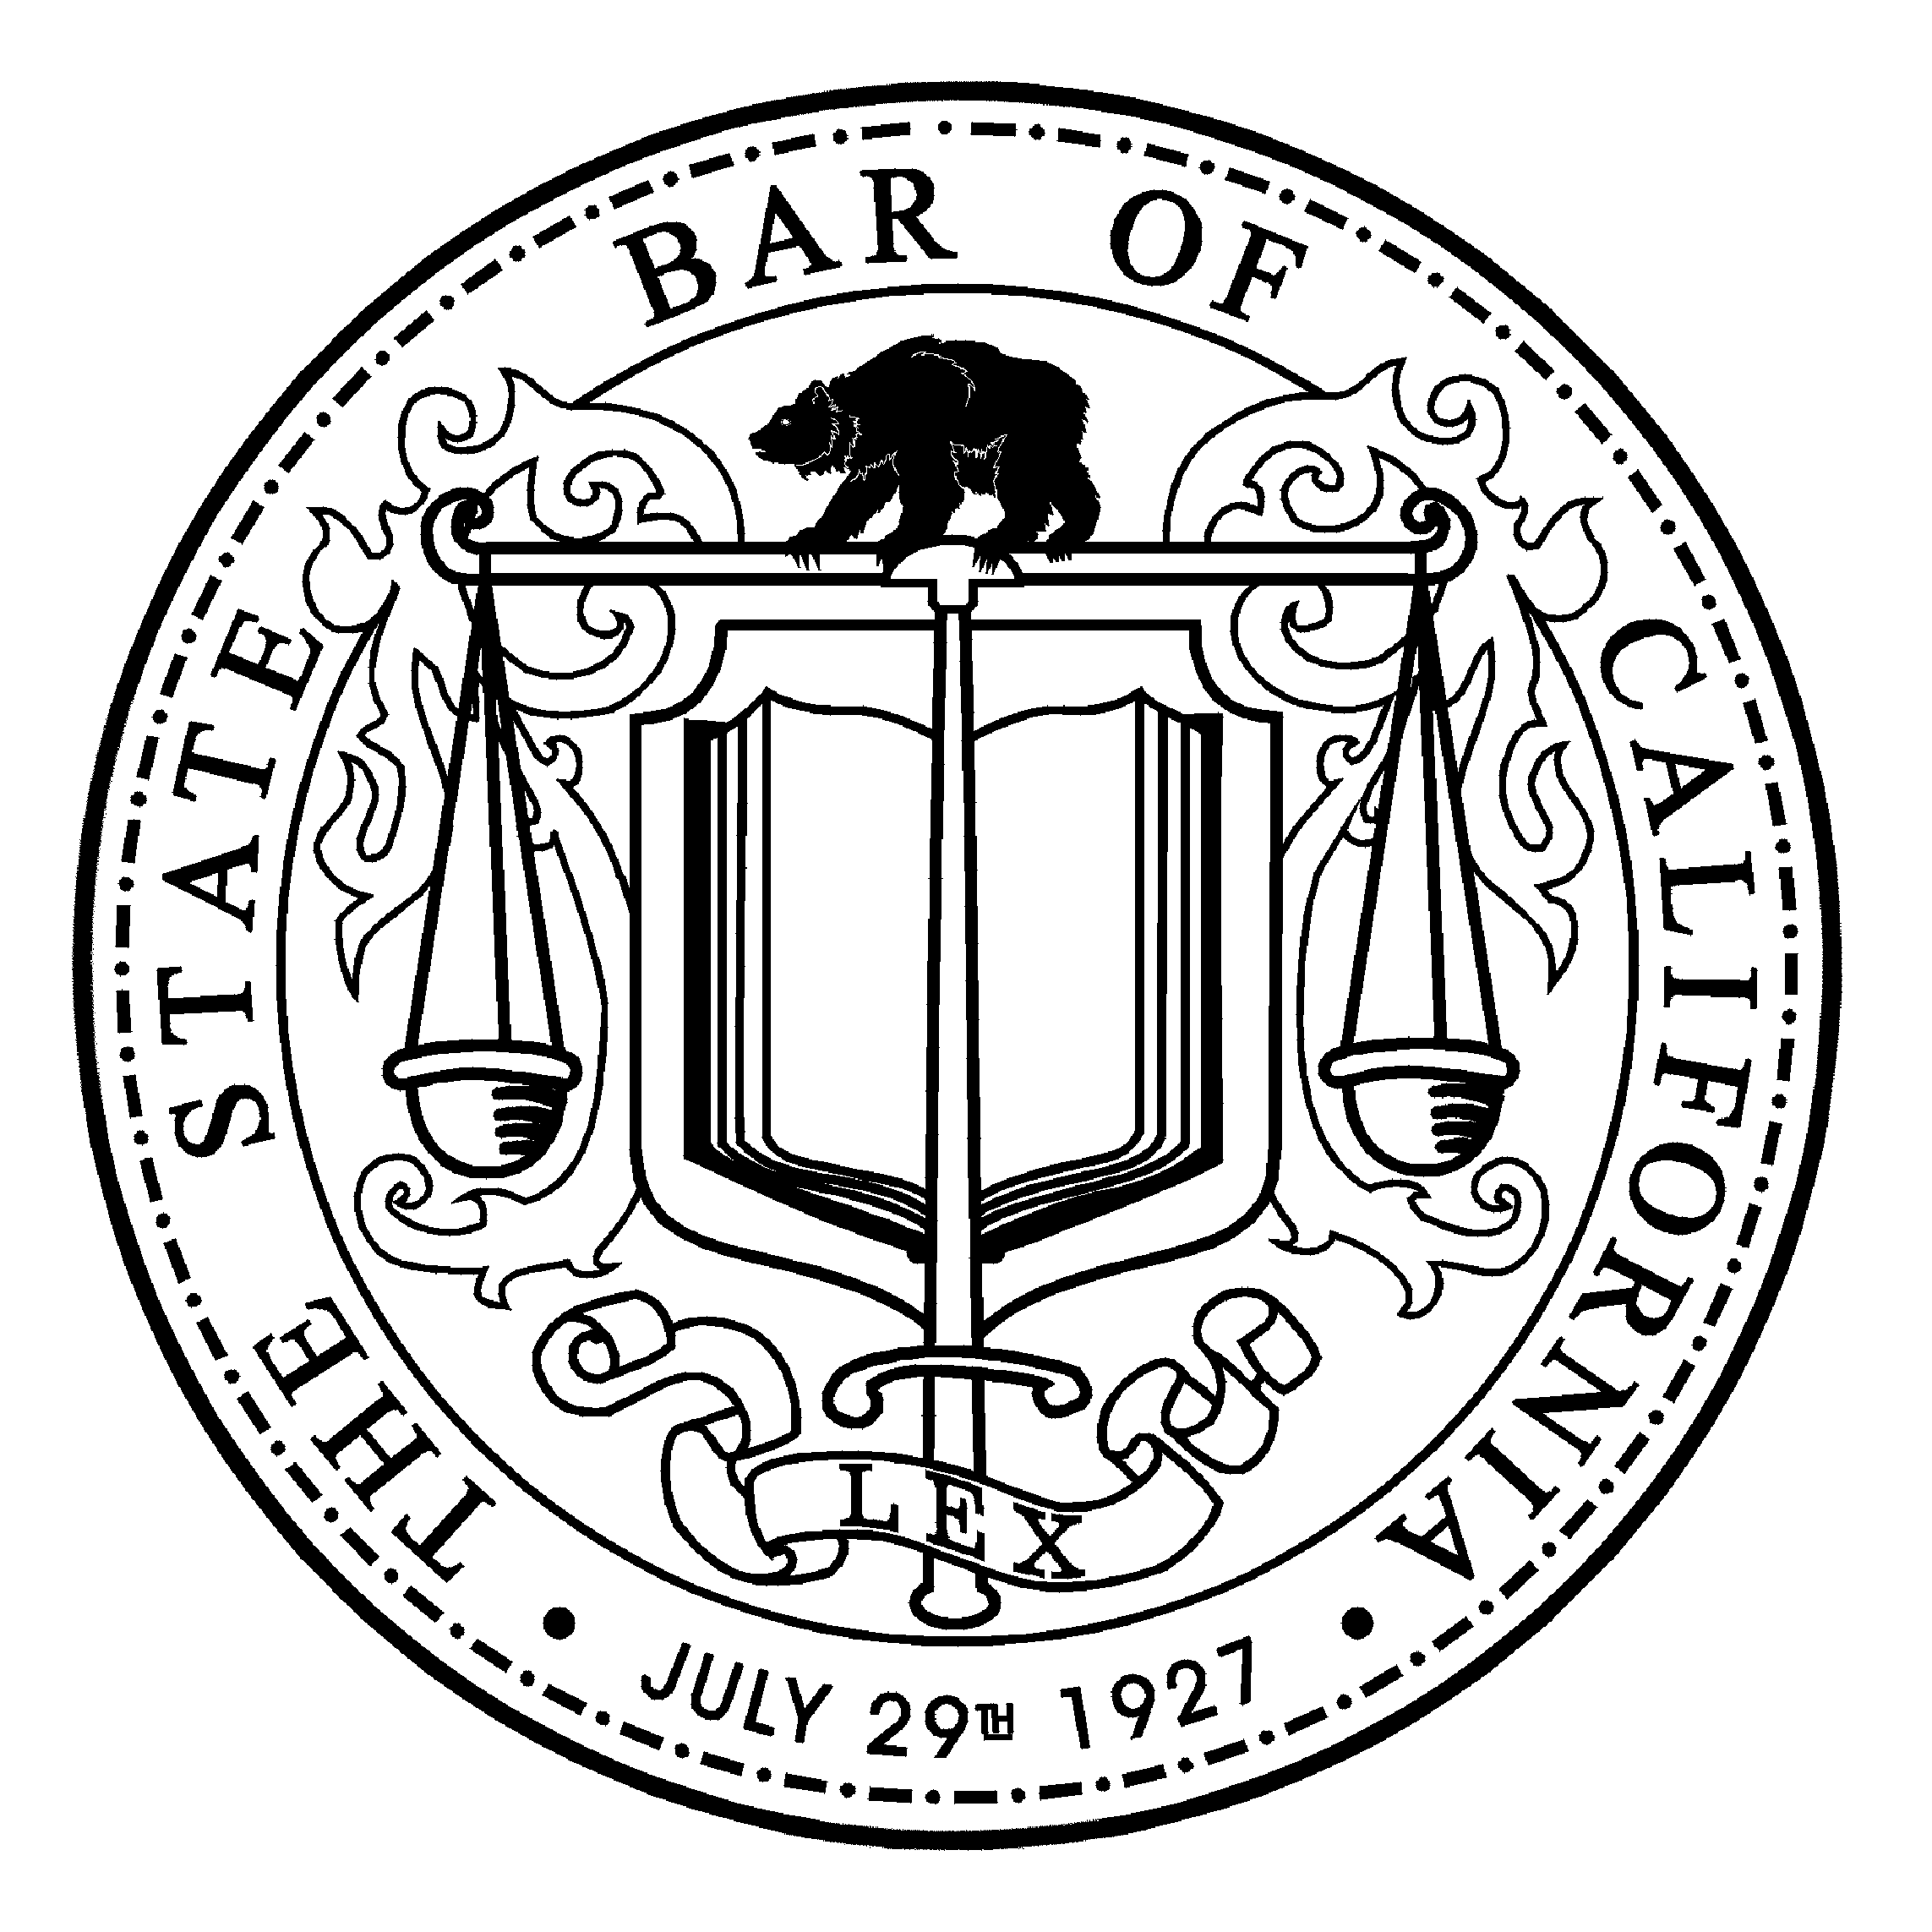 California Supreme Court Logo - Home. Encino Bankruptcy, Personal Injury & Civil Litigation Law